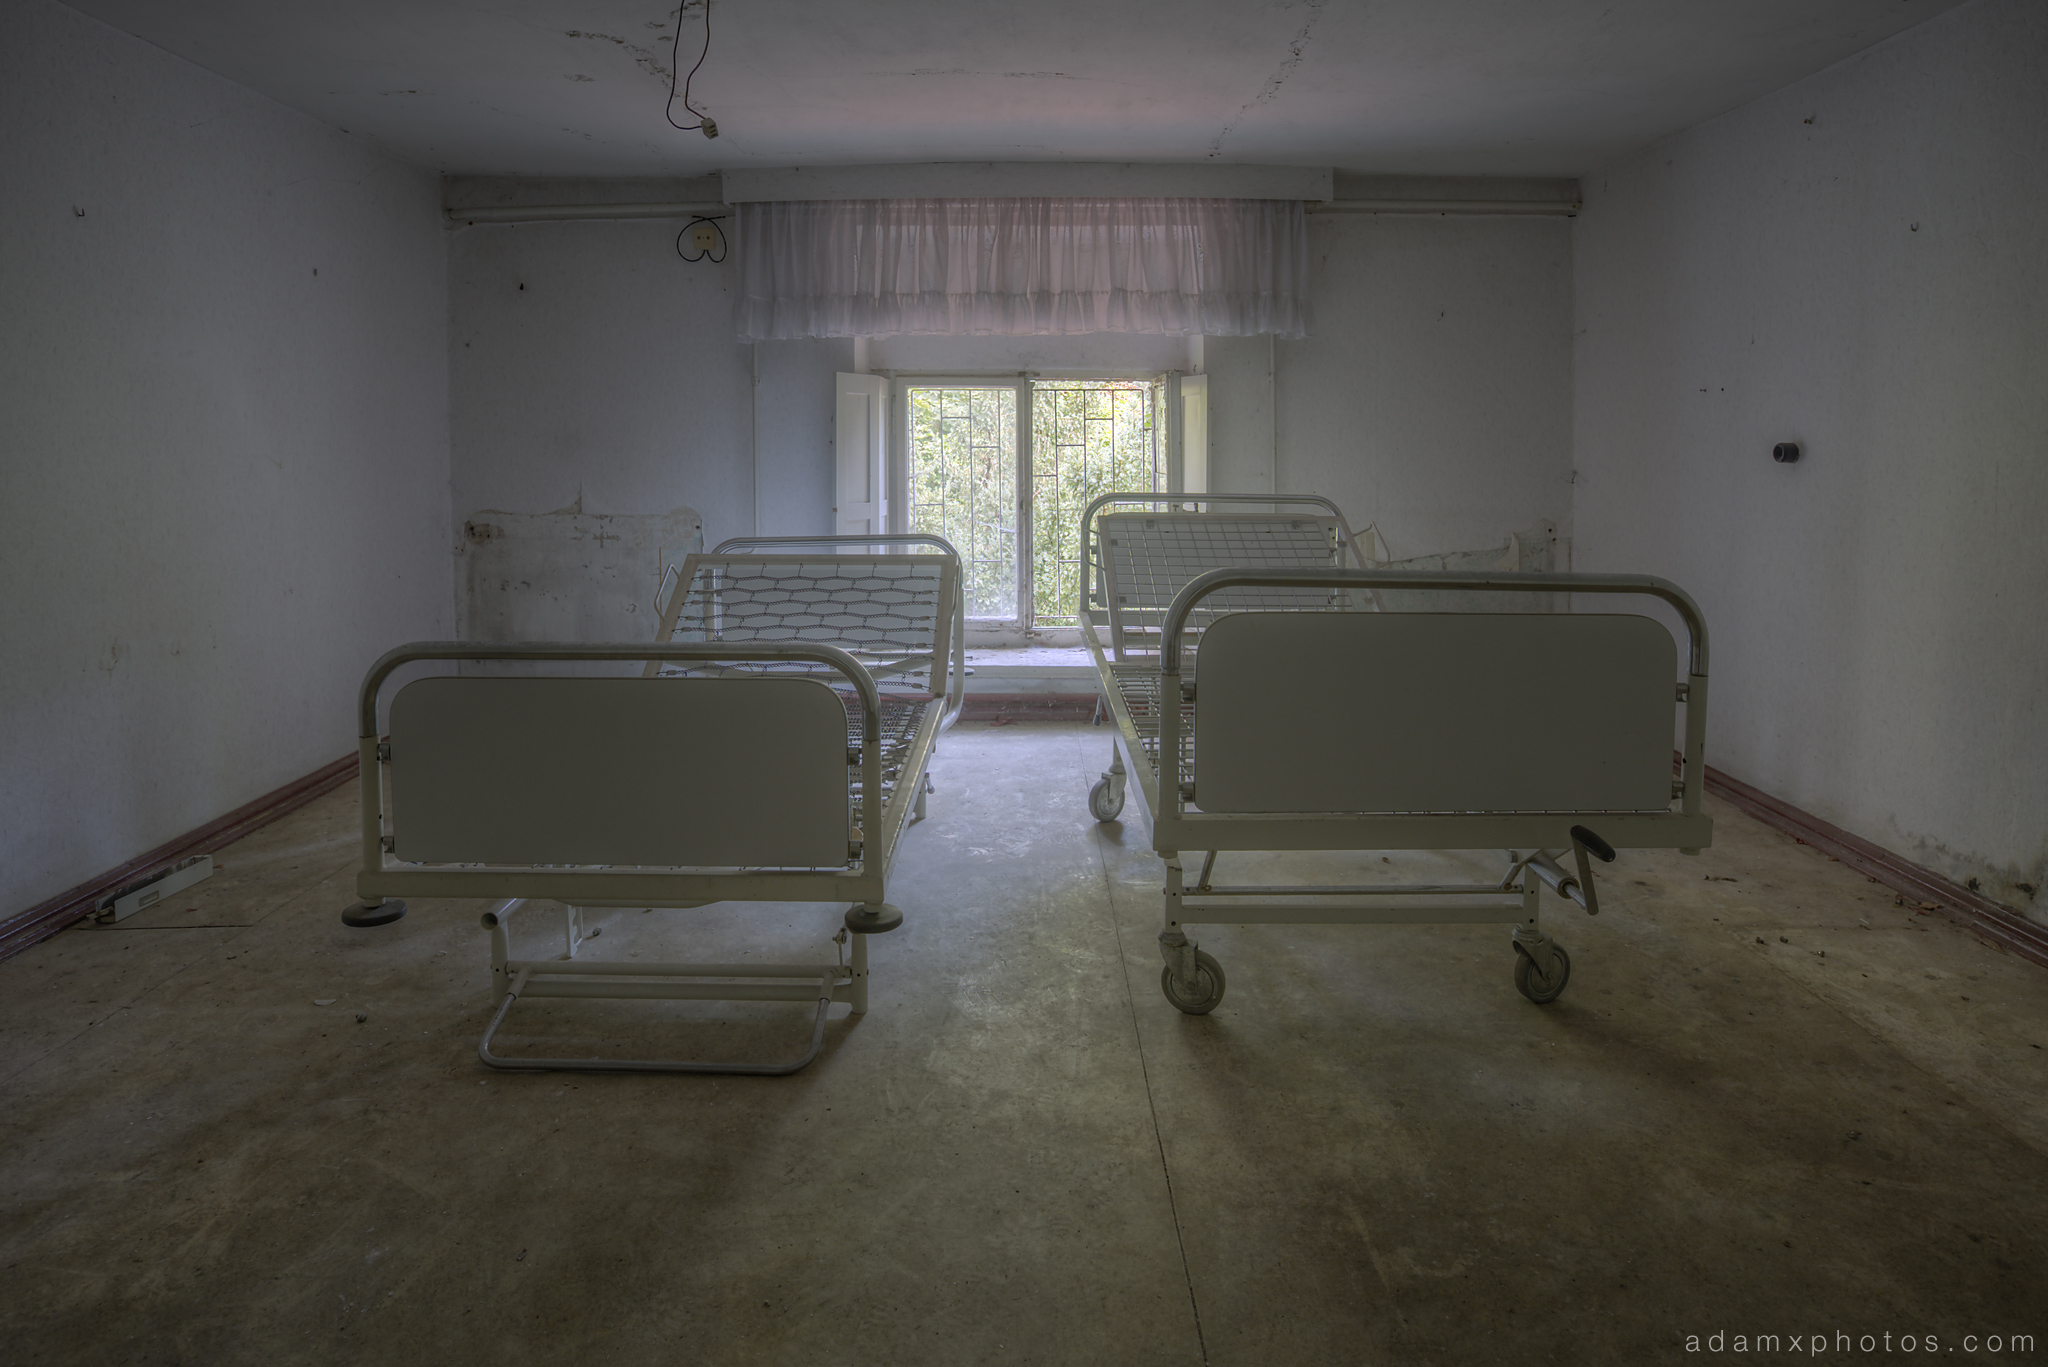 Adam X Urbex Krankenhaus von rollstuhlen Hospital of wheelchairs Germany Urban Exploration Decay Lost Abandoned Hidden Wheelchair hospital beds